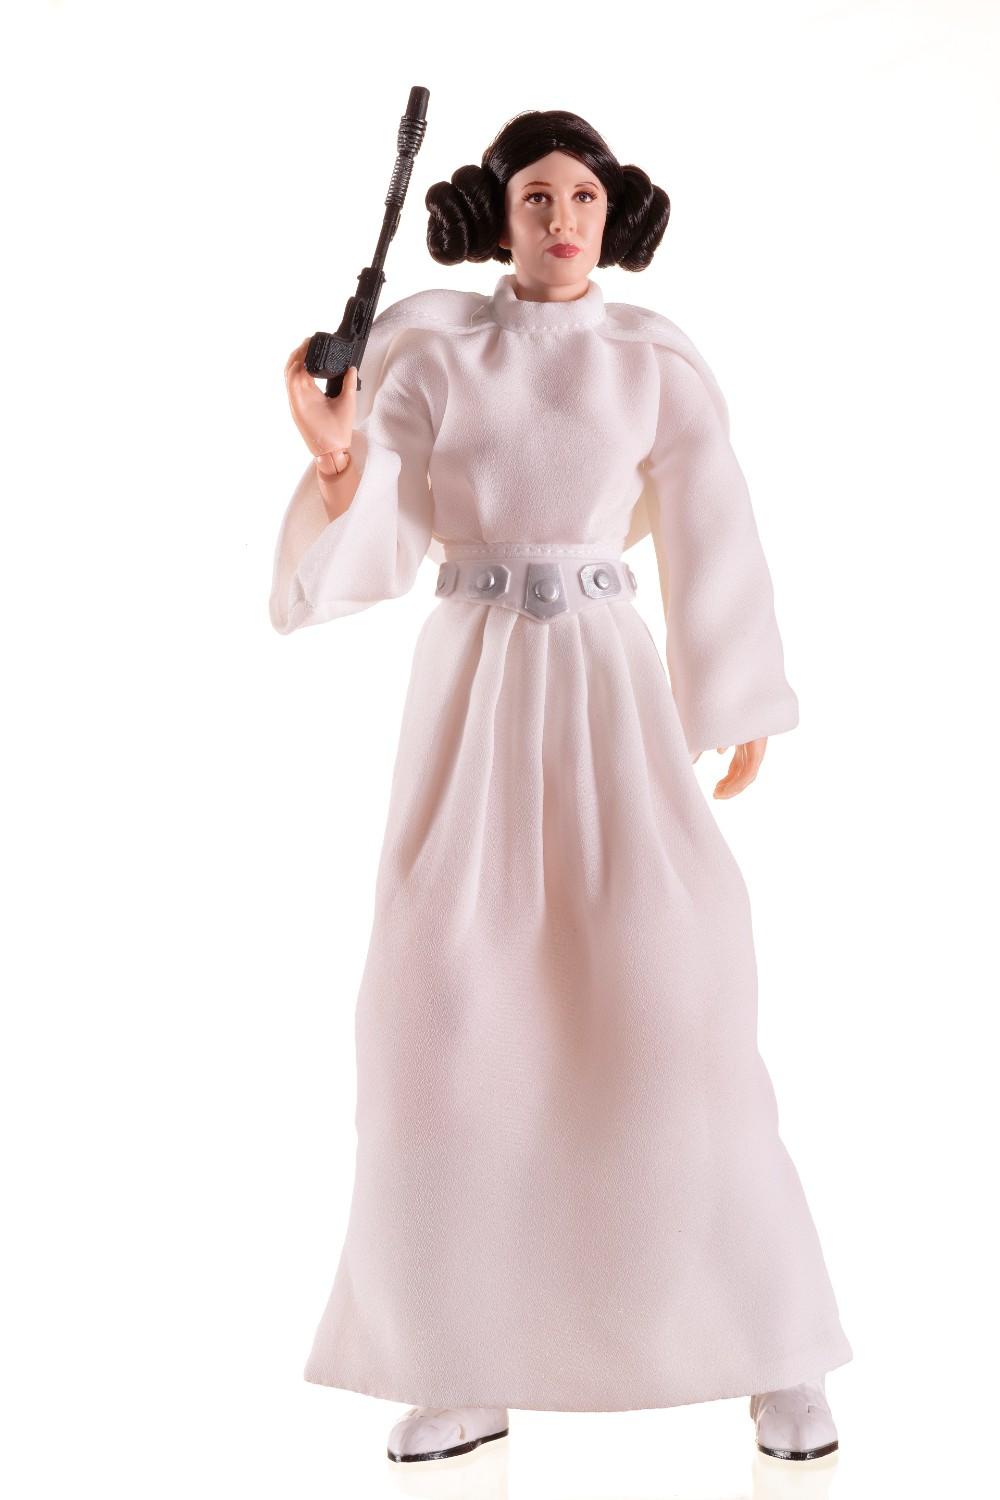 Princess Leia Organa Elite Series Doll, Star Wars: A New Hope, 2017, Disney.